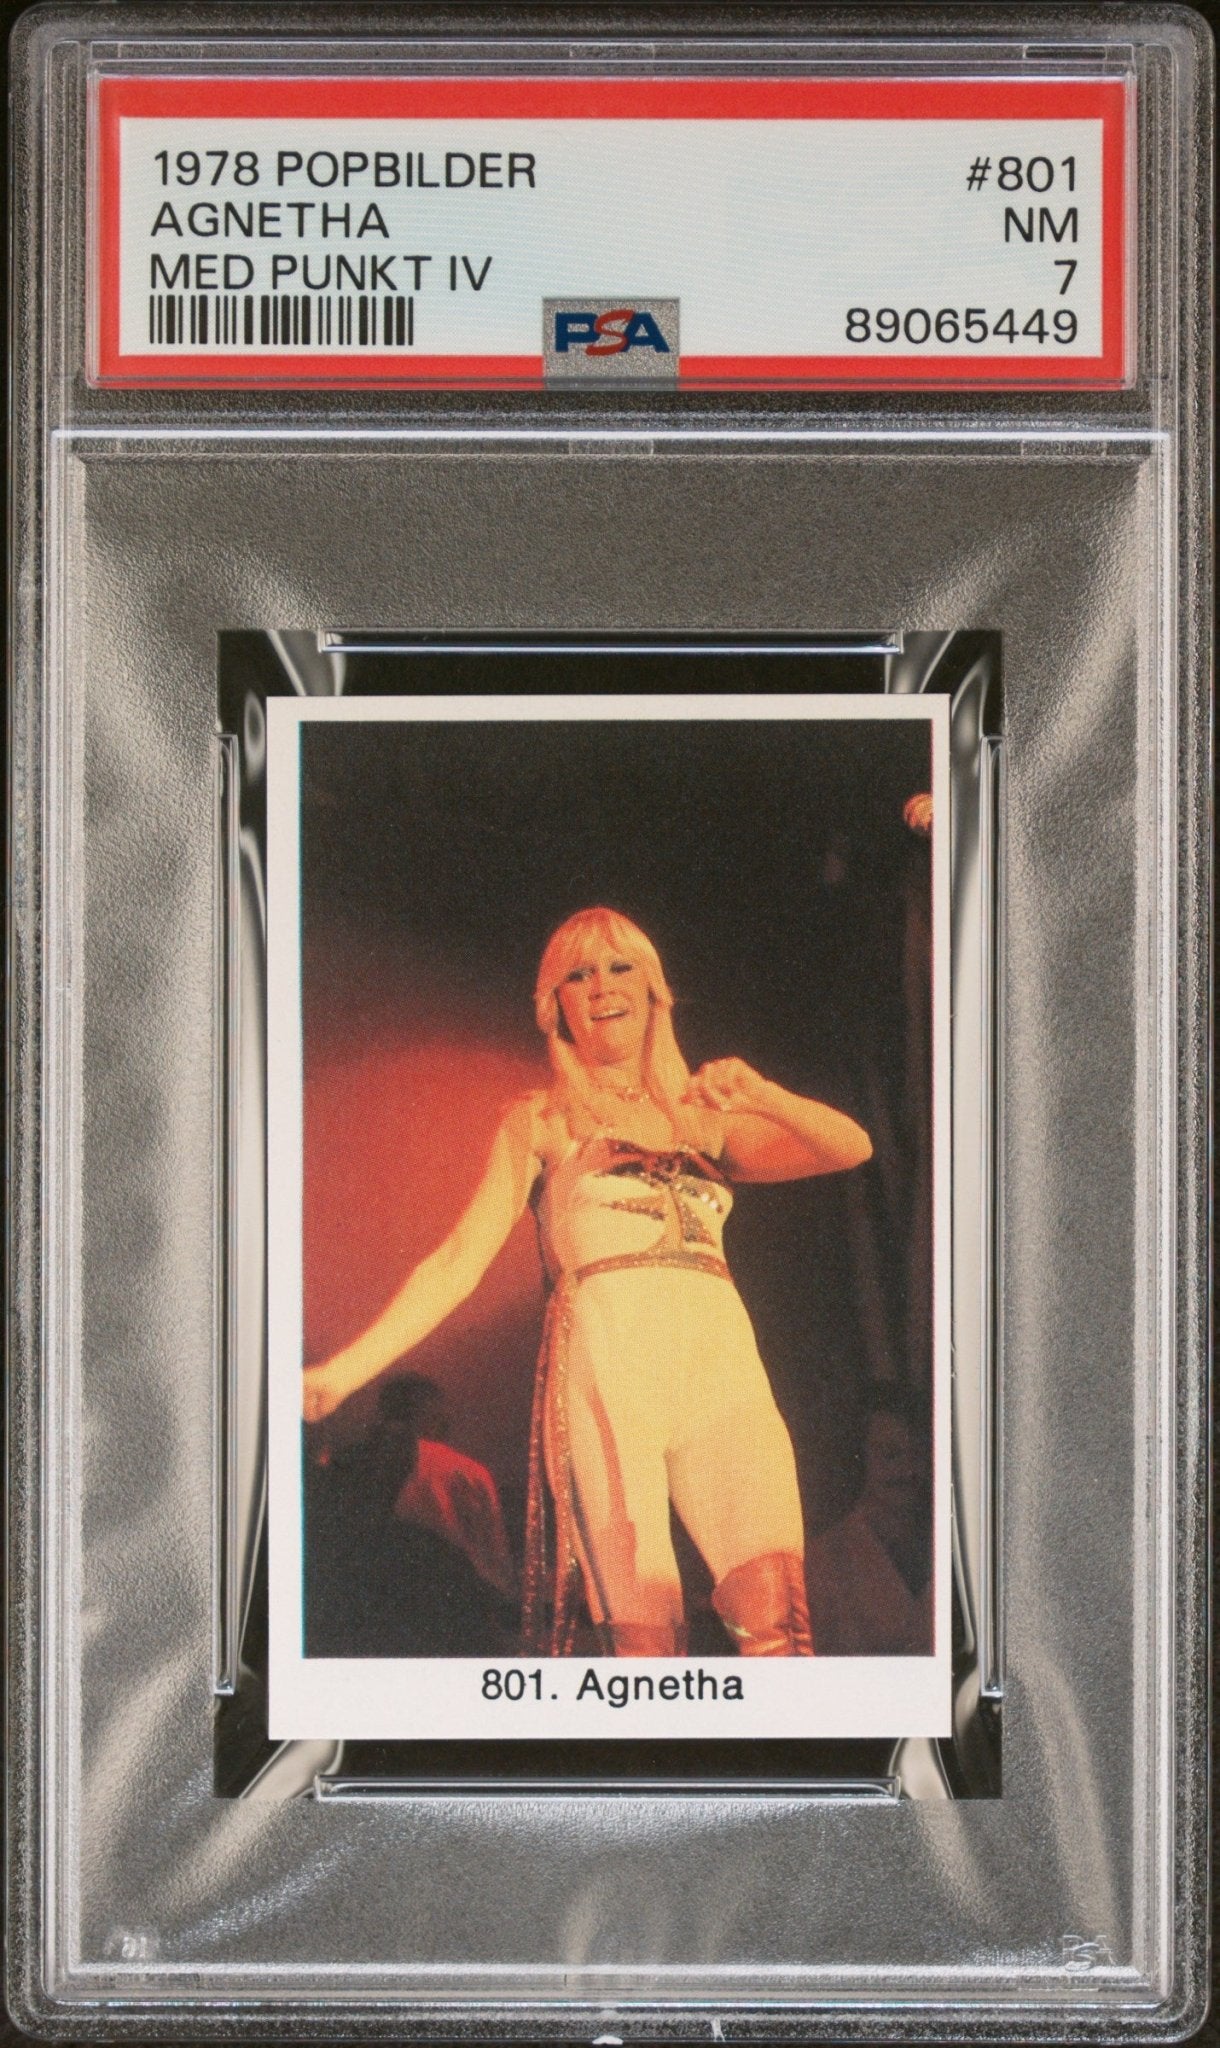 AGNETHA PSA 7 1979 Popbilder Med Punkt IV Pop Culture Singer Abba #801 Pop Culture Base Graded Cards - Hobby Gems